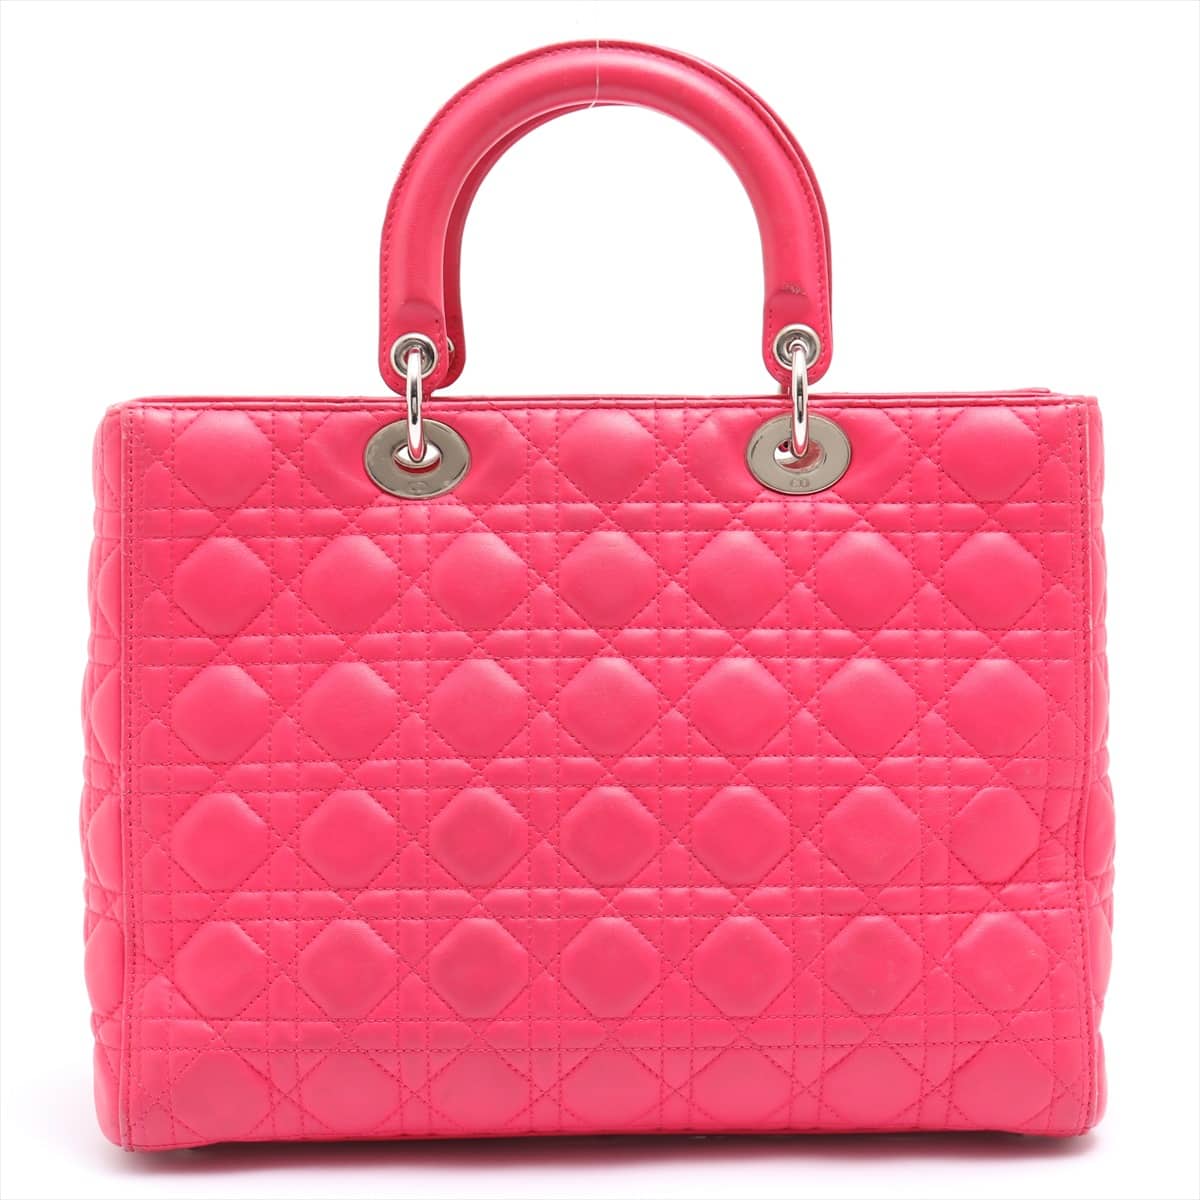 Christian Dior Lady Dior Cannage Leather 2way handbag Pink